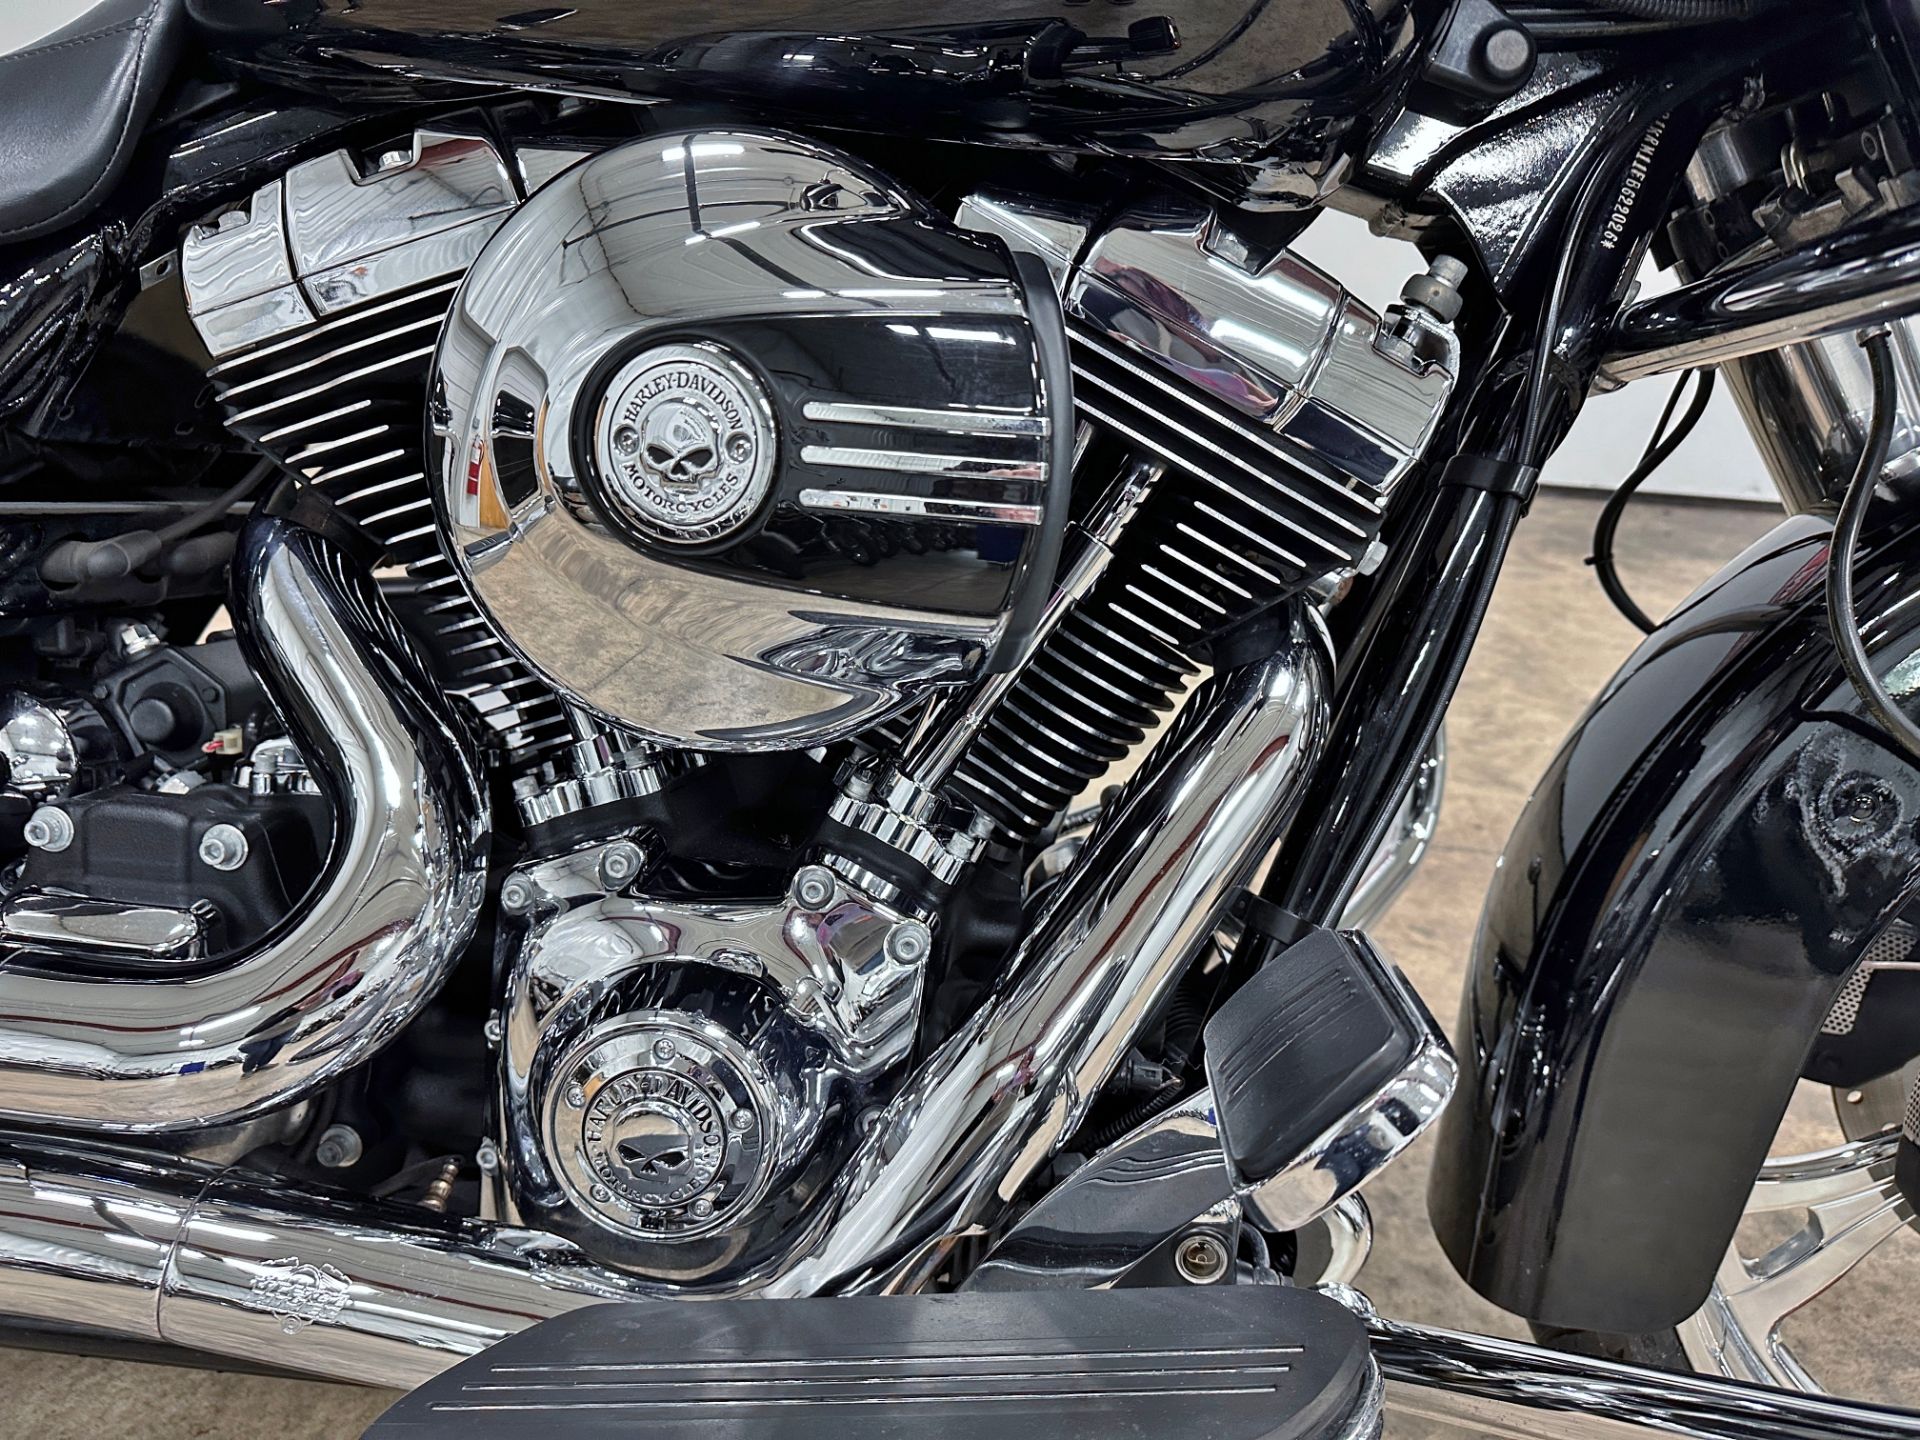 2015 Harley-Davidson Street Glide® Special in Sandusky, Ohio - Photo 2